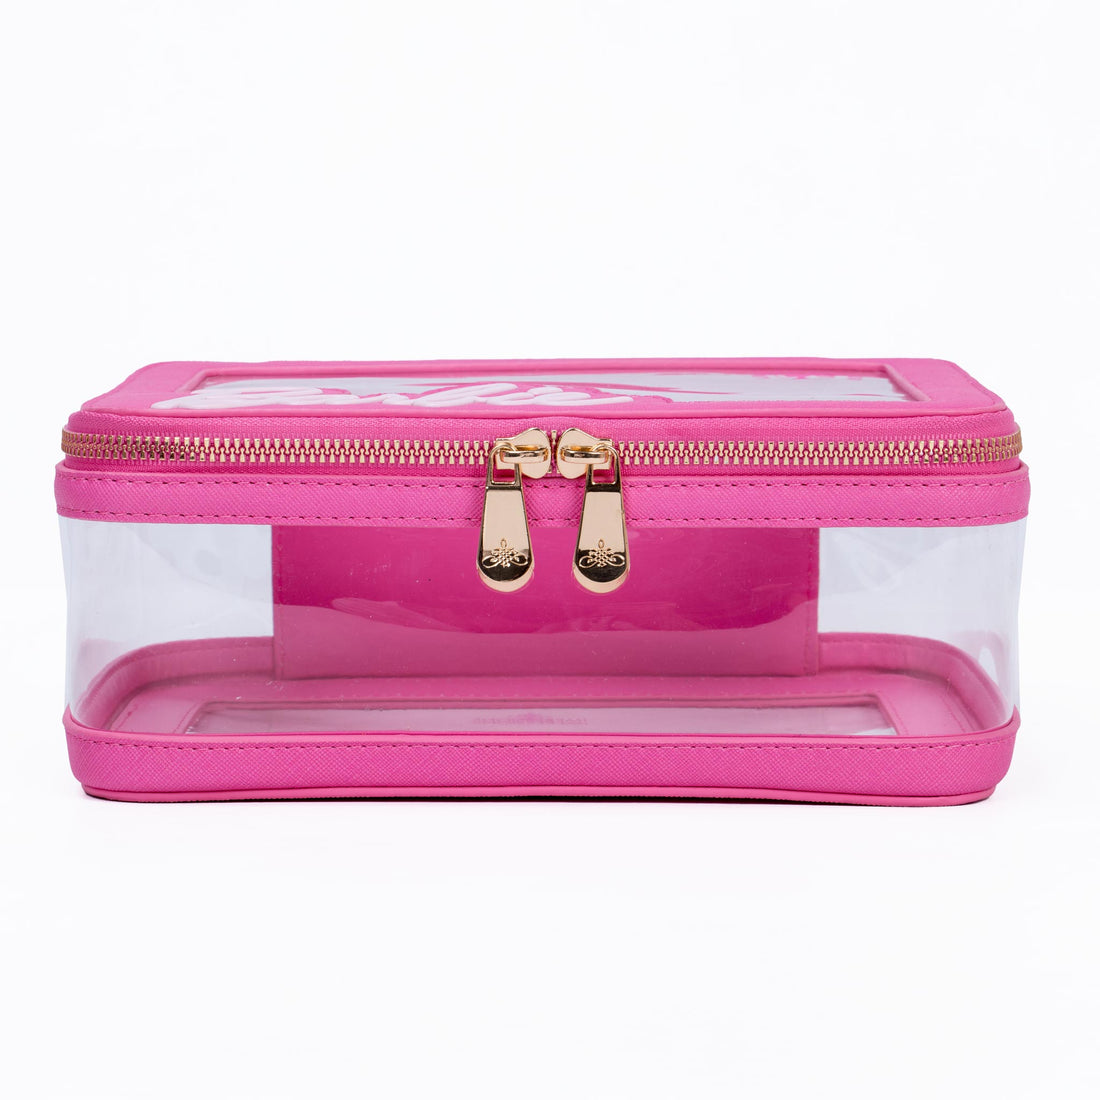 Barbie™ Makeup Carry Case